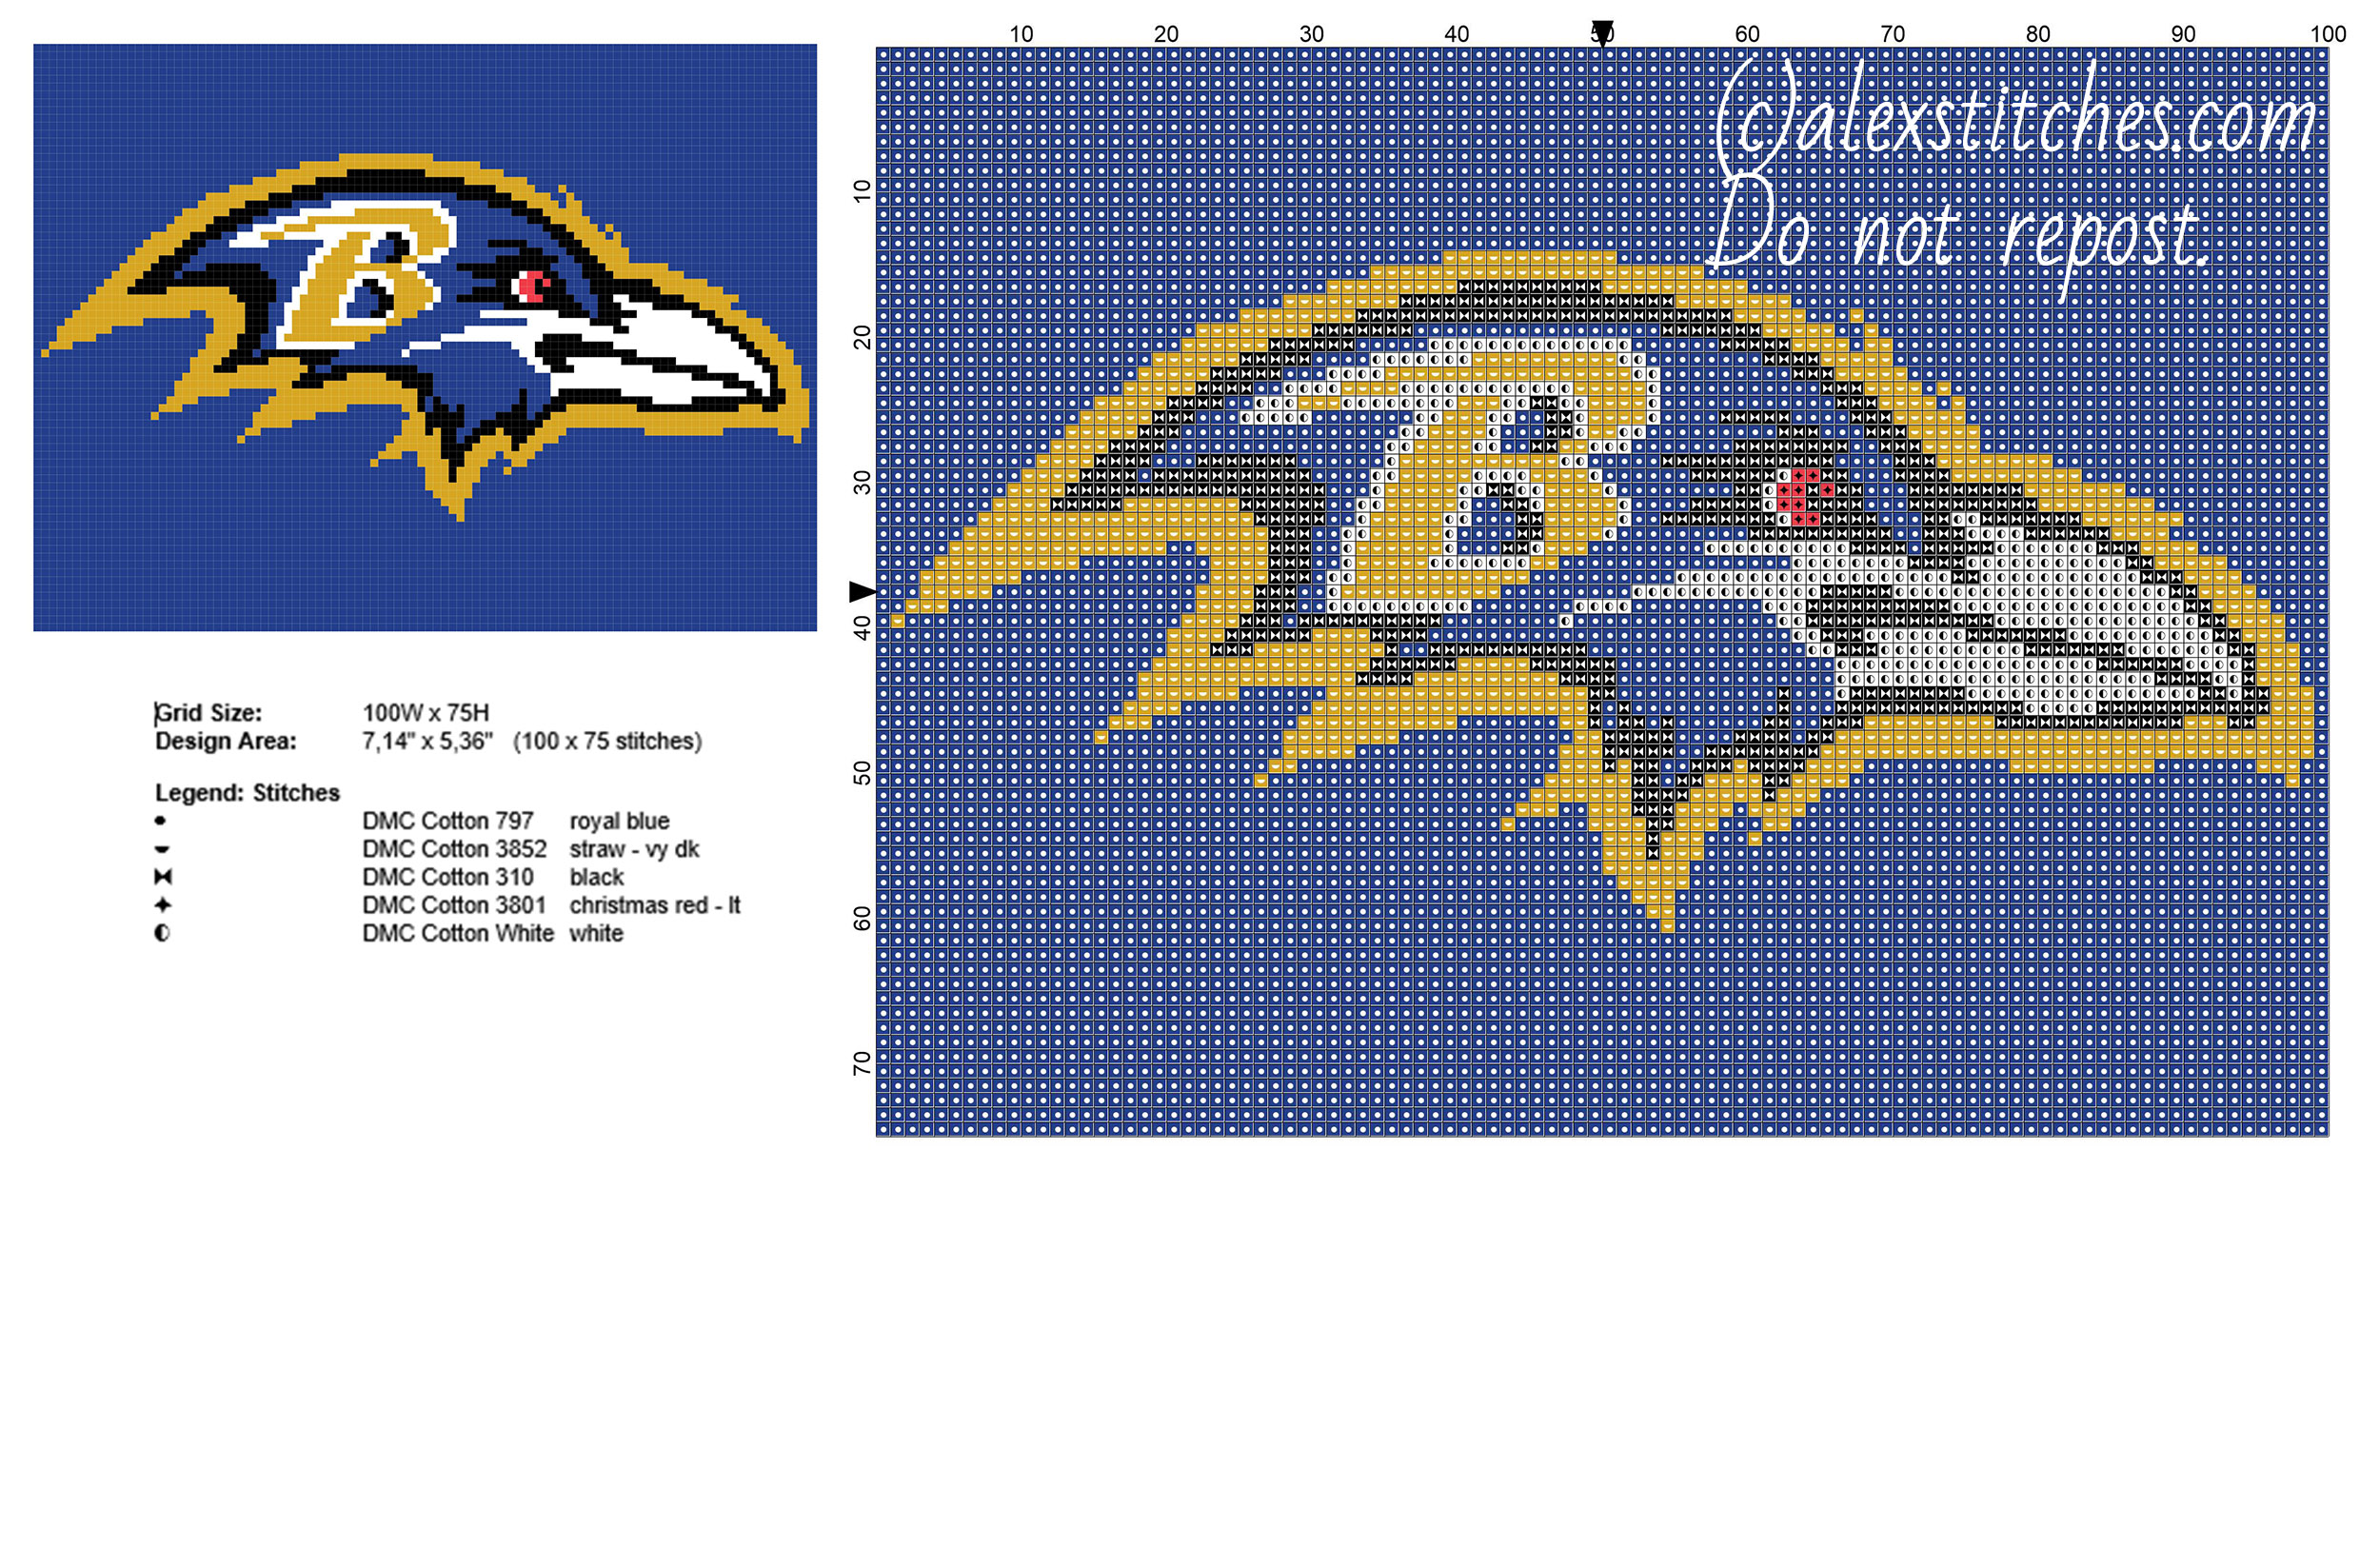 Baltimore Ravens NFL National Football League Team logo free cross stitch pattern